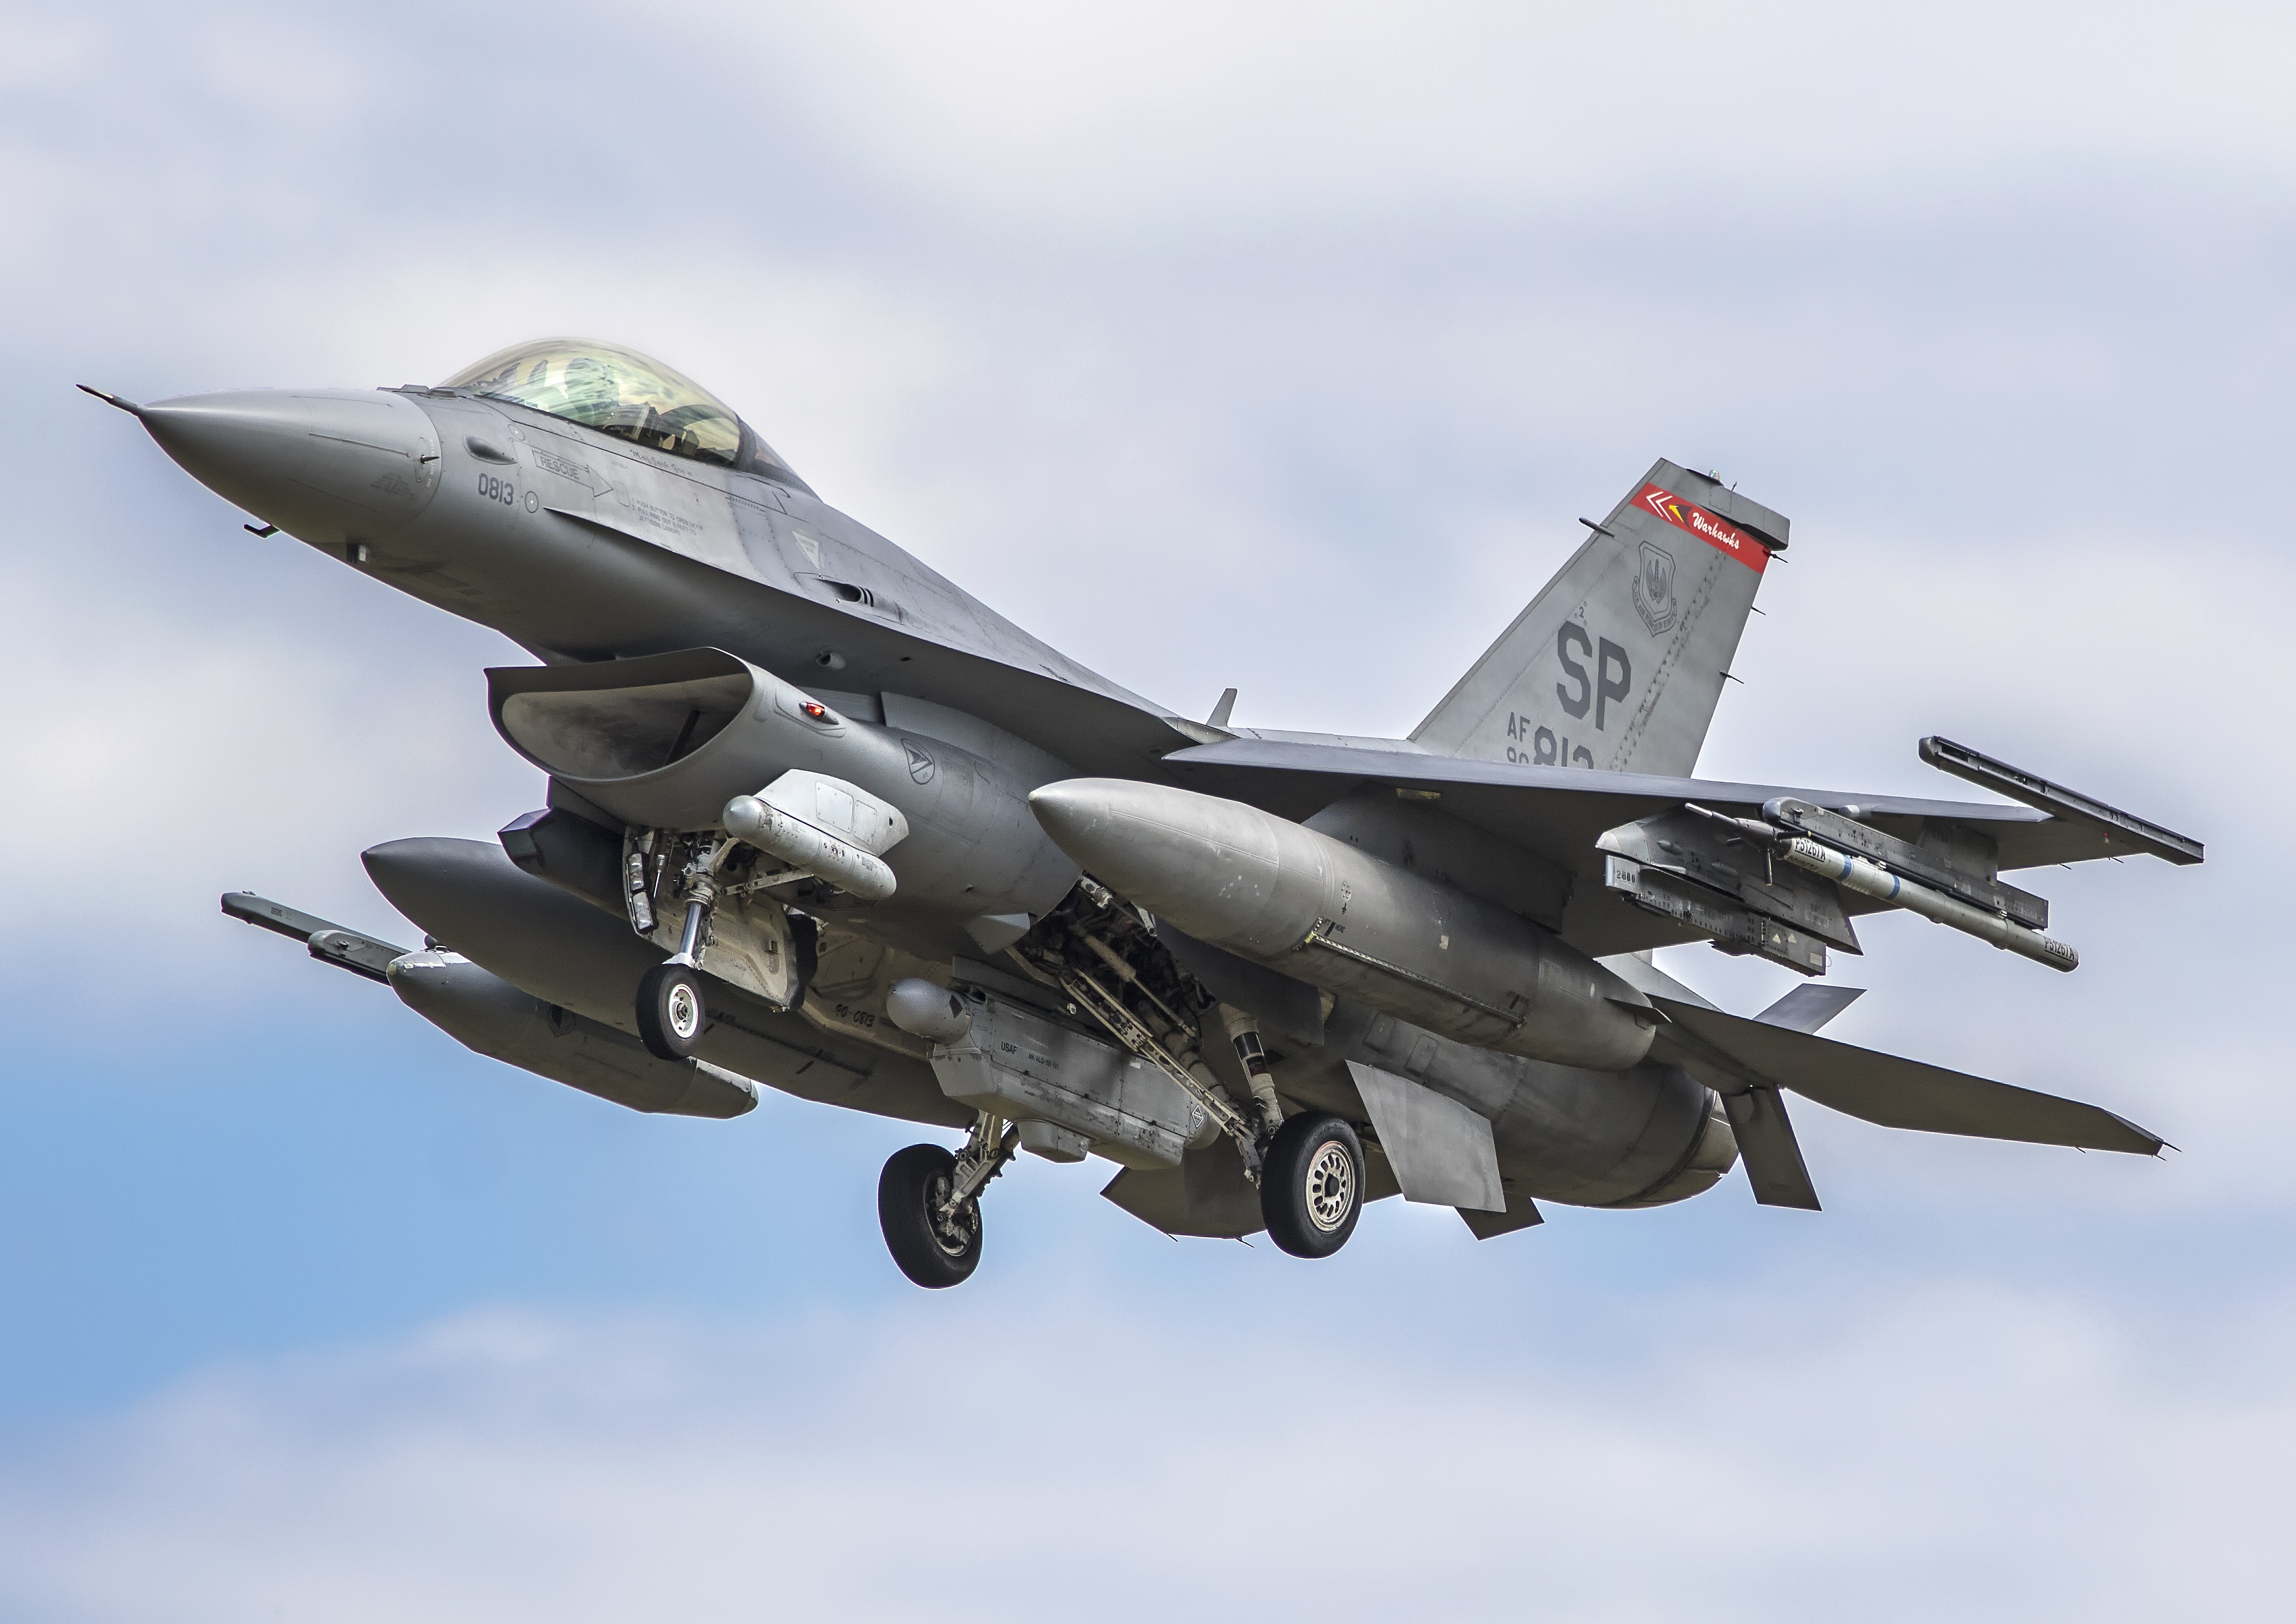 General Dynamics F-16 Fighting Falcon 4k Ultra HD Wallpaper - EroFound